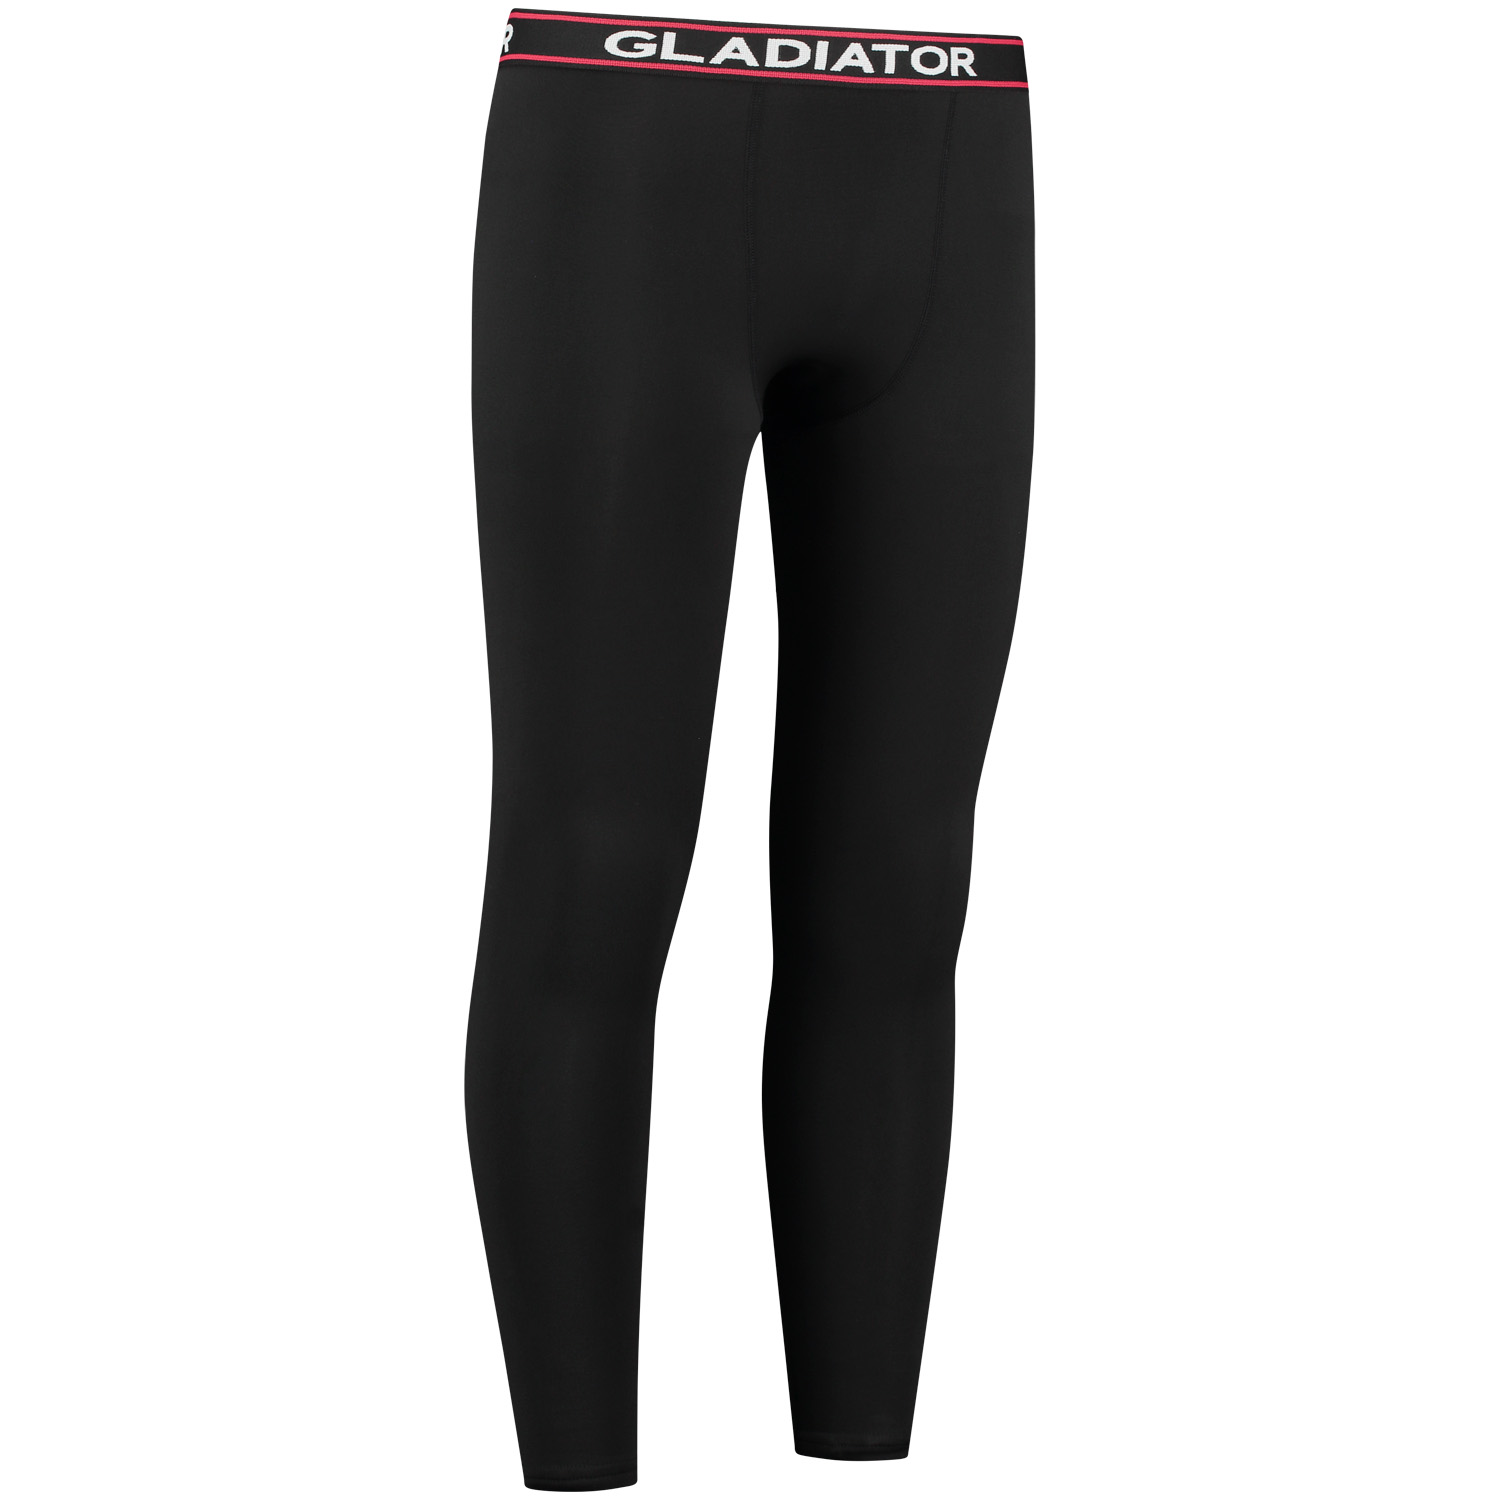 Gladiator Sports Goalkeeper Pants | Become Gladiator